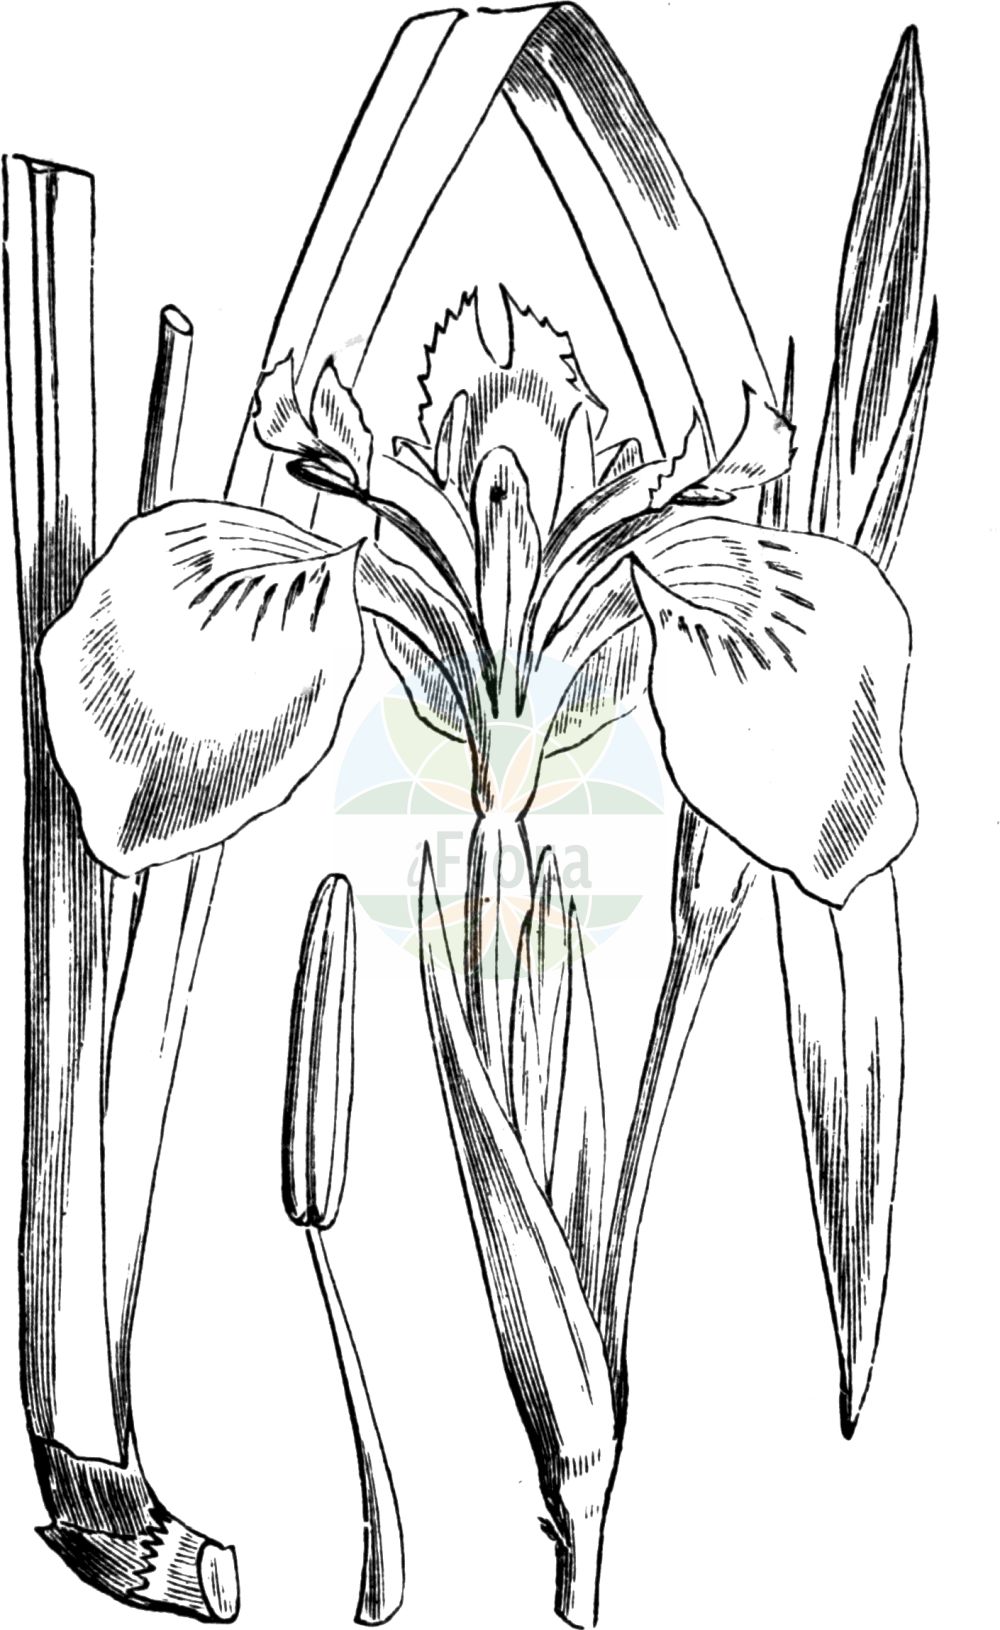 Historische Abbildung von Iris pseudacorus (Sumpf-Schwertlilie - Yellow Iris). Das Bild zeigt Blatt, Bluete, Frucht und Same. ---- Historical Drawing of Iris pseudacorus (Sumpf-Schwertlilie - Yellow Iris). The image is showing leaf, flower, fruit and seed.(Iris pseudacorus,Sumpf-Schwertlilie,Yellow Iris,Acorus adulterinus,Colchicum falcifolium,Iris acoriformis,Iris acoroides,Iris bastardii,Iris curtopetala,Iris flava,Iris lutea,Iris pallidior,Iris paludosa,Iris palustris,Iris pseudacorus,Iris sativa,Limnirion pseudacorus,Limniris pseudacorus,Moraea candolleana,Pseudo-iris palustris,Vieusseuxia iridioides,Xiphion acoroides,Xiphion pseudacorus,Xyridion acoroideum,Xyridion pseudacorus,Sumpf-Schwertlilie,Gelbe Schwertlilie,Wasser-Schwertlilie,Yellow Iris,Jacob's Wort,Paleyellow Iris,Rocky Mountain Iris,Water Flag,Yellow Flag,Yellow-flag Iris,Iris,Schwertlilie,Iris,Iridaceae,Schwertliliengewächse,Iris family,Blatt,Bluete,Frucht,Same,leaf,flower,fruit,seed,Fitch et al. (1880))